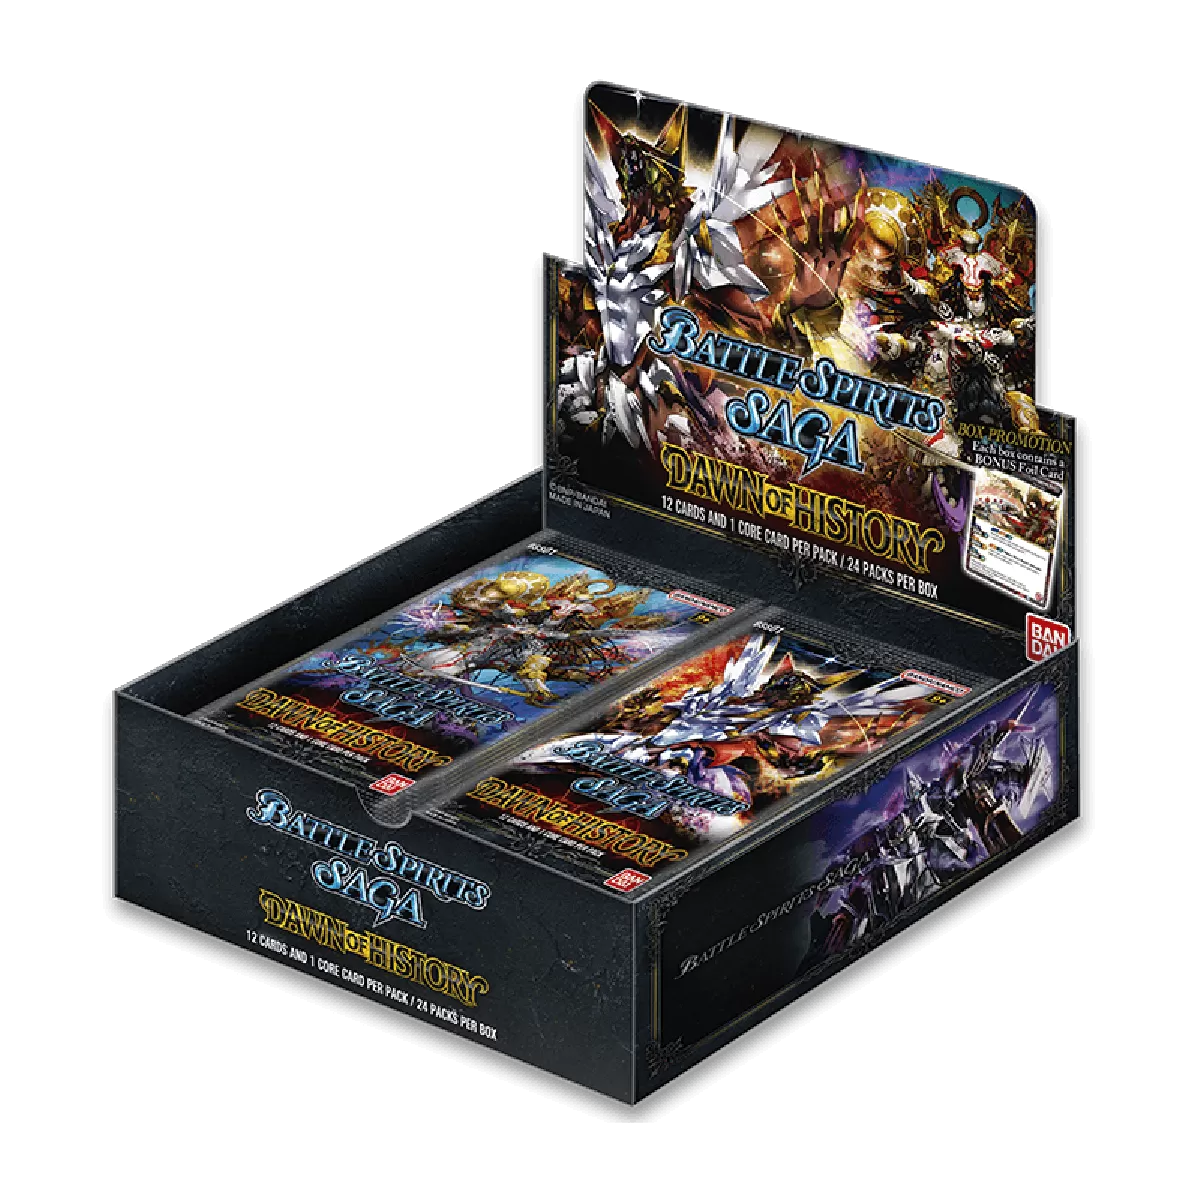 Battle Spirits Saga Card Game Set 01 Dawn of History (BSS01)